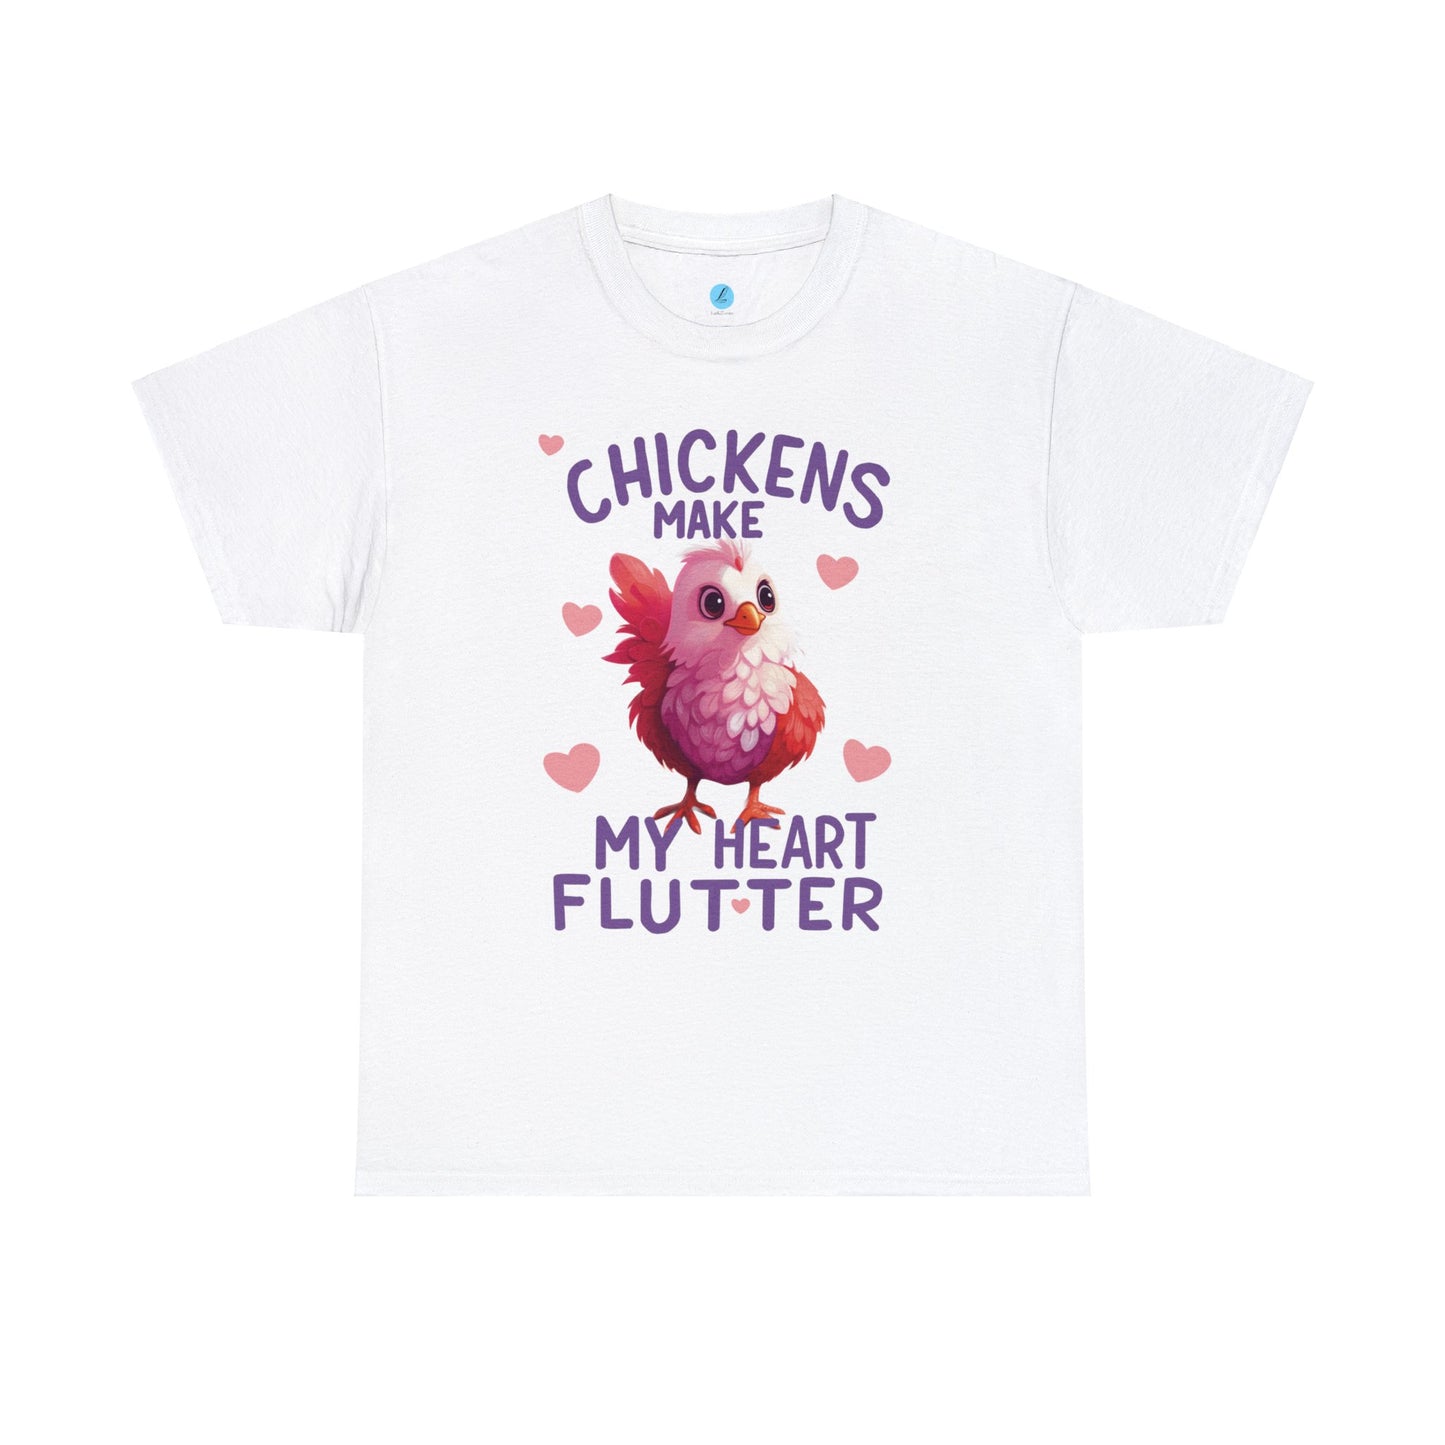 Chickens Make My Heart Flutter, Baby Chick Cute Cartoon Drawing, Chicken Mom